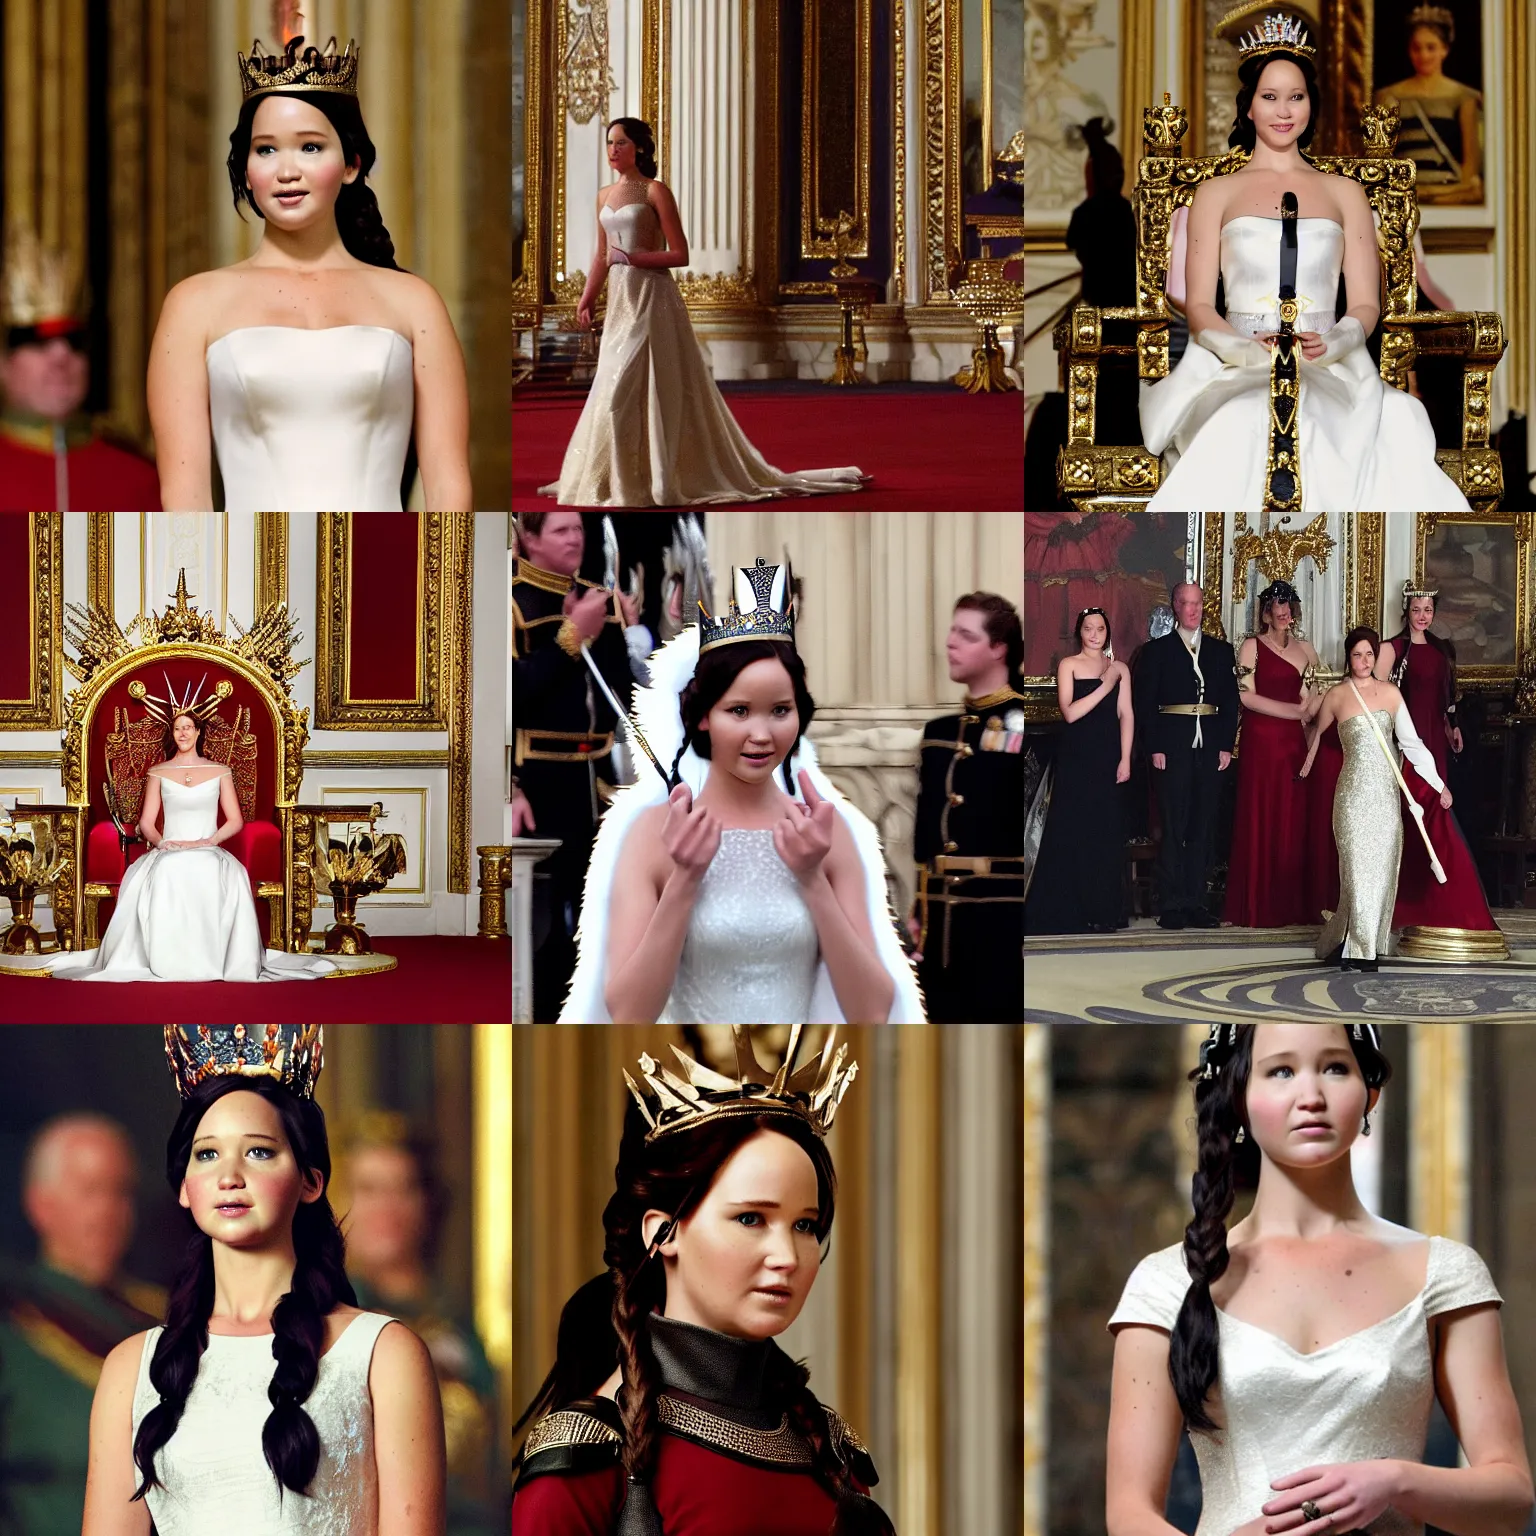 Prompt: Katniss Everdeen wearing a crown, becoming Queen, at a coronation inside Buckingham Palace